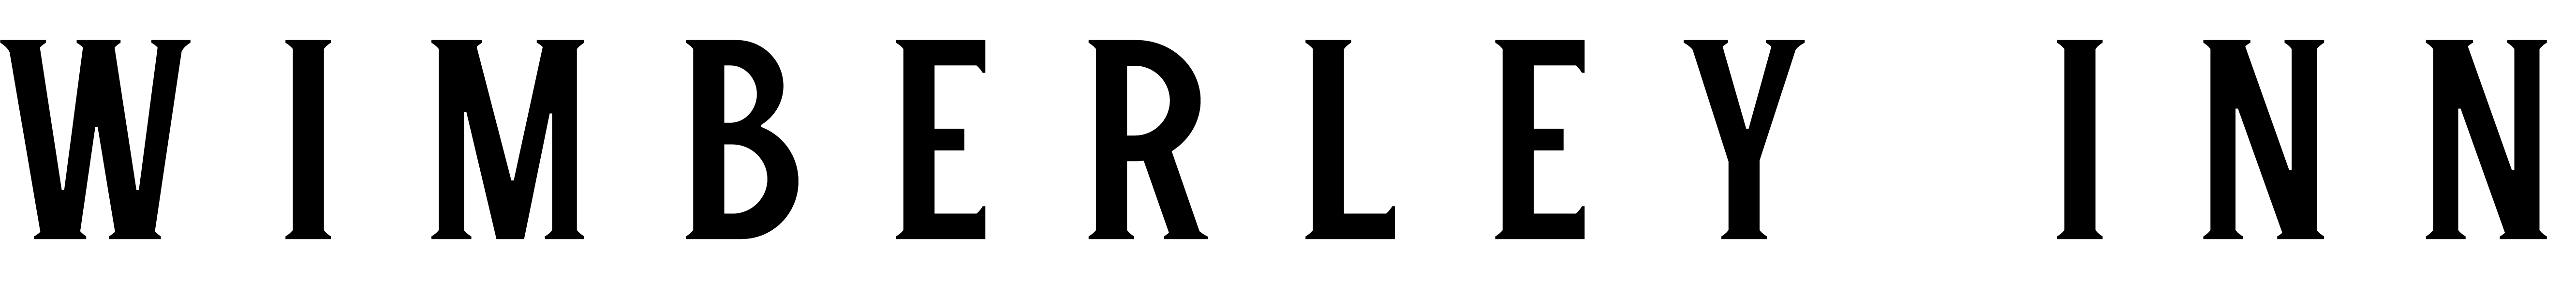 Main Logo_Horizontal